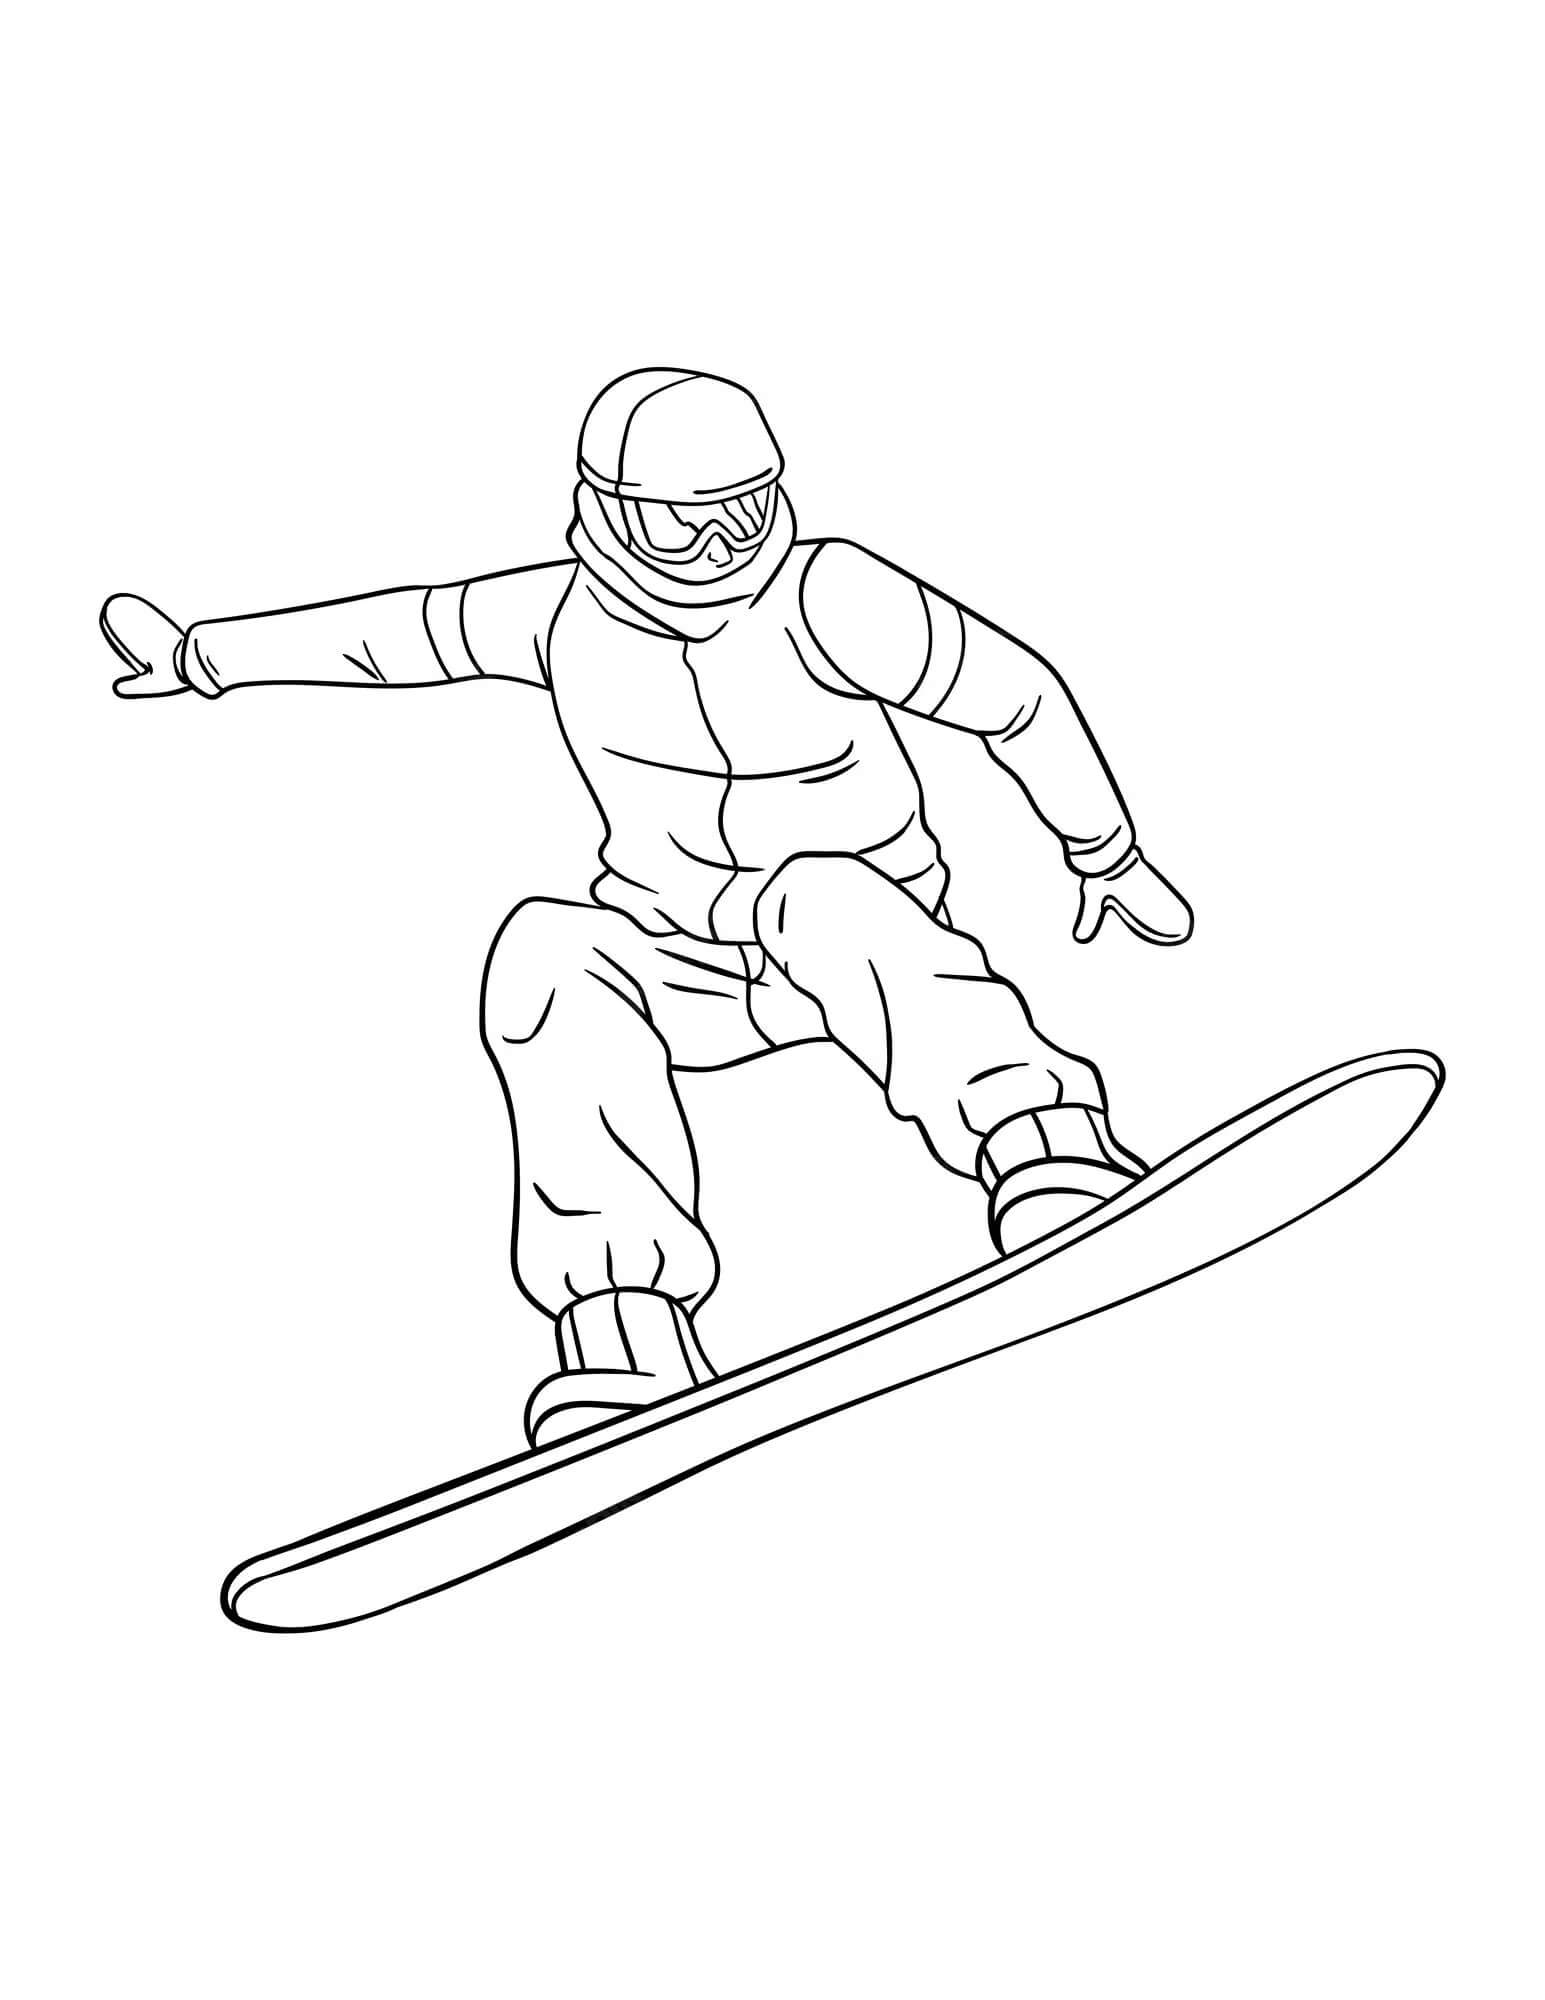 Snowboarding para colorir